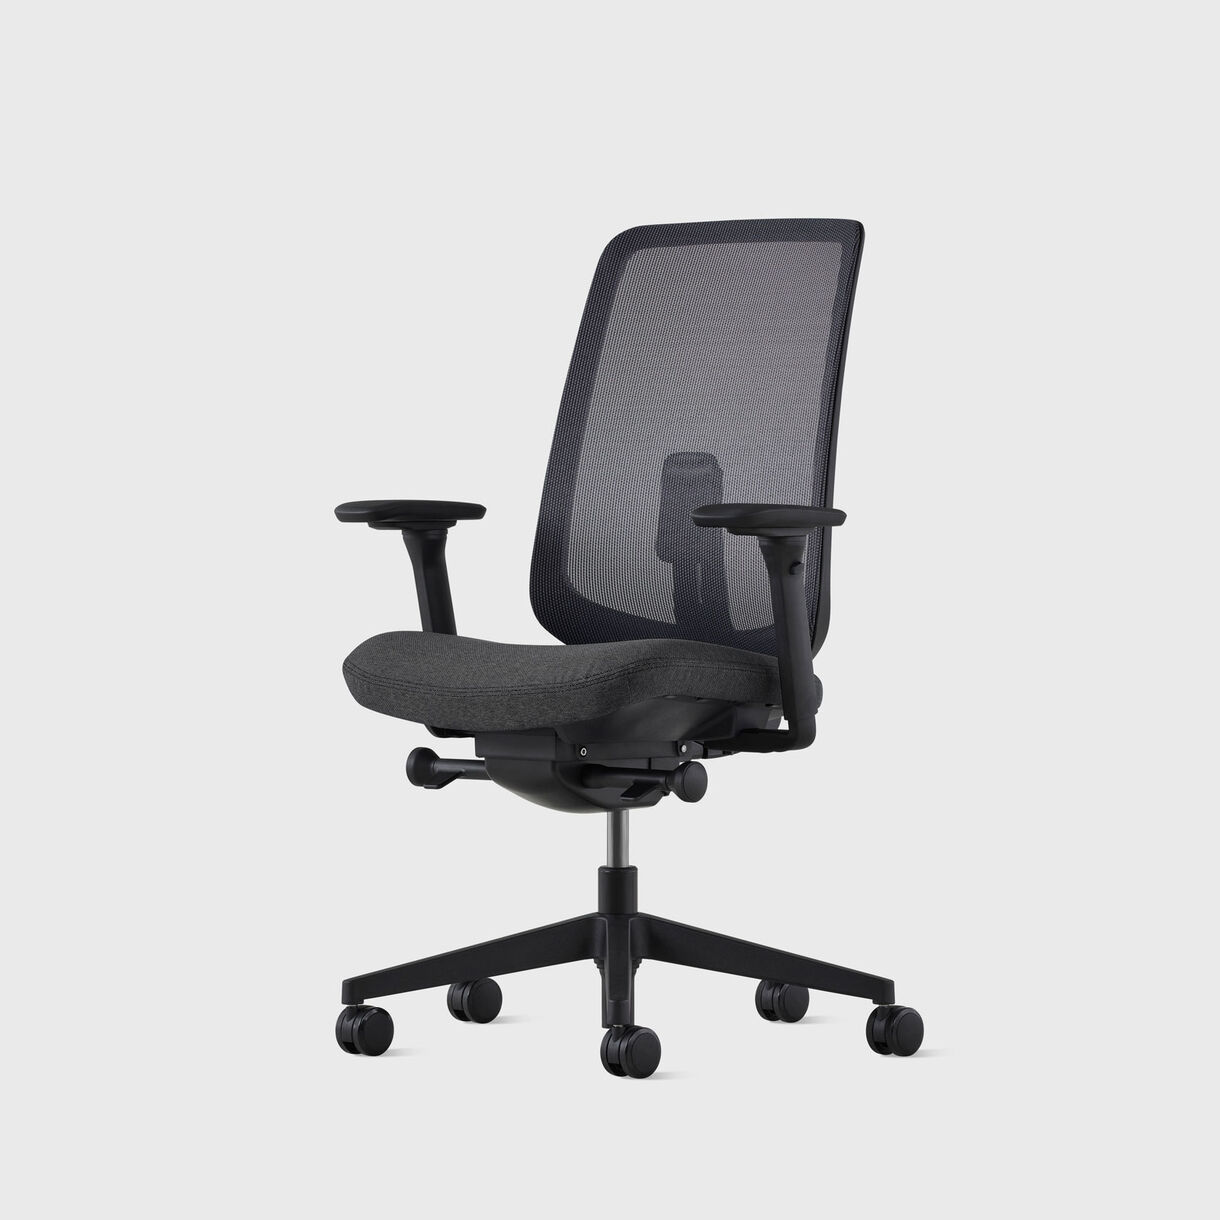 Verus Suspension Back Task Chair - Black Frame, Shale Interweave & Cinder Upholstery - Fully Adjustable Arms